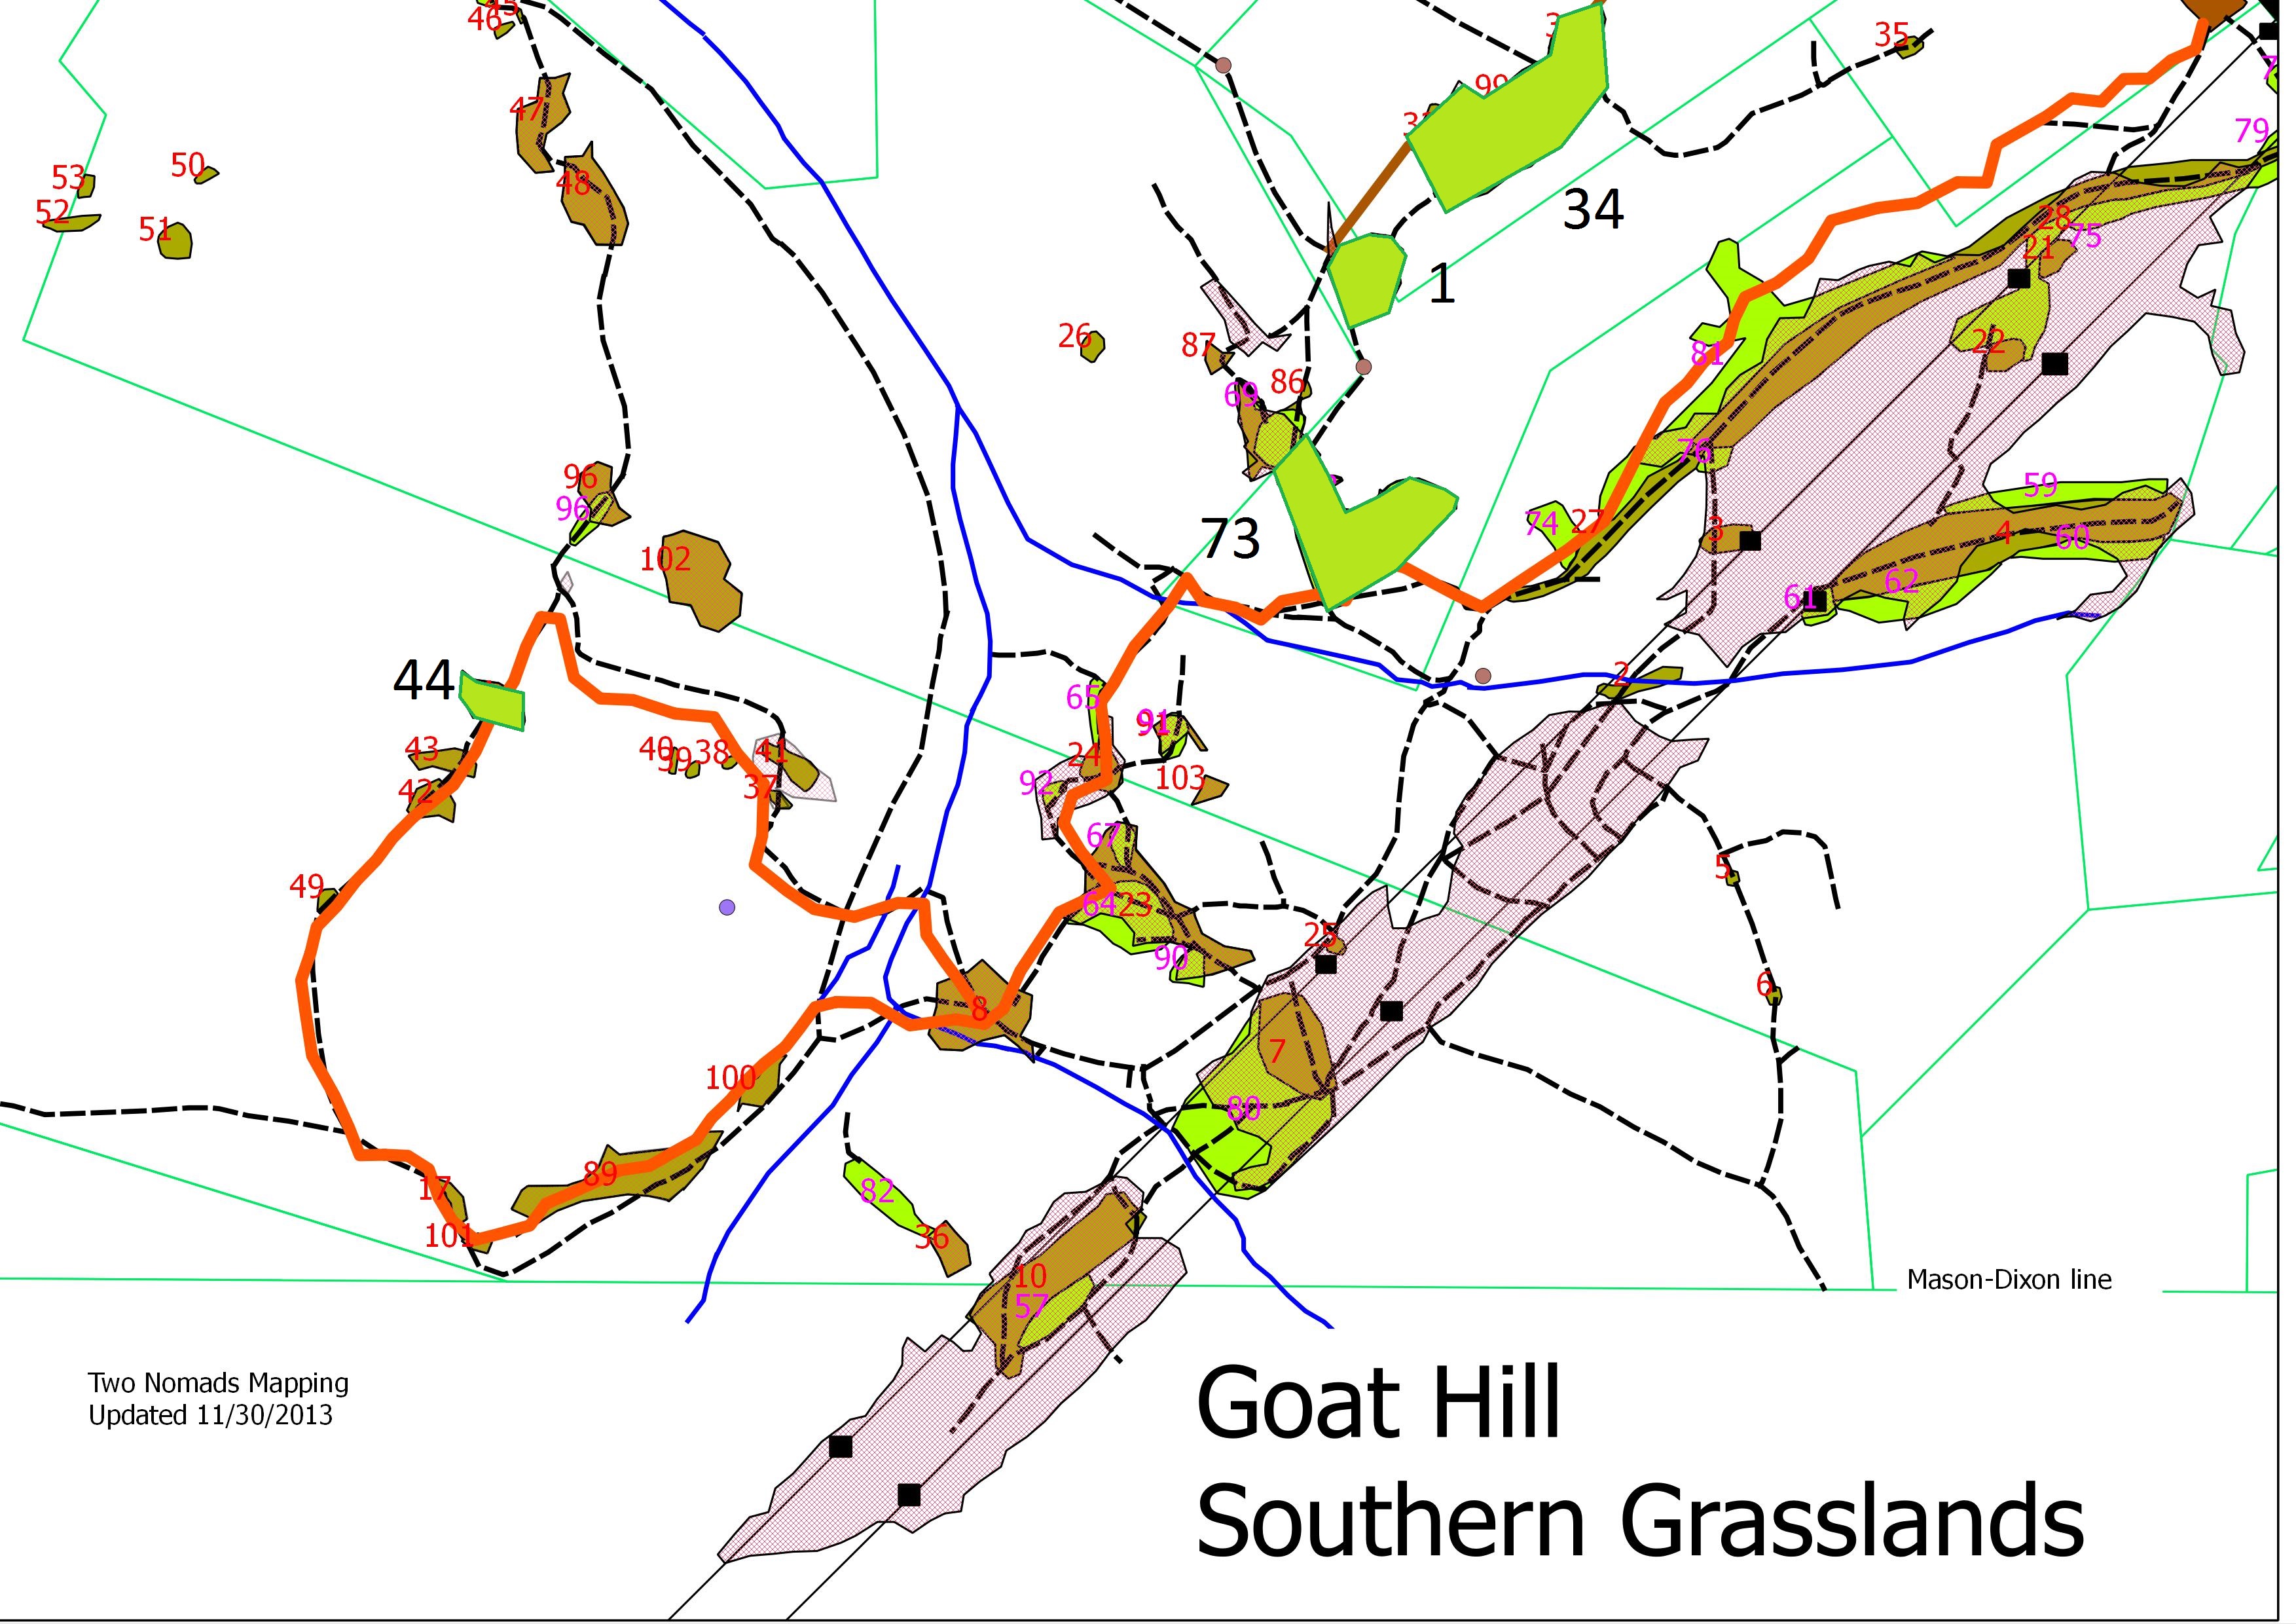 Goat Hill South Grasslands